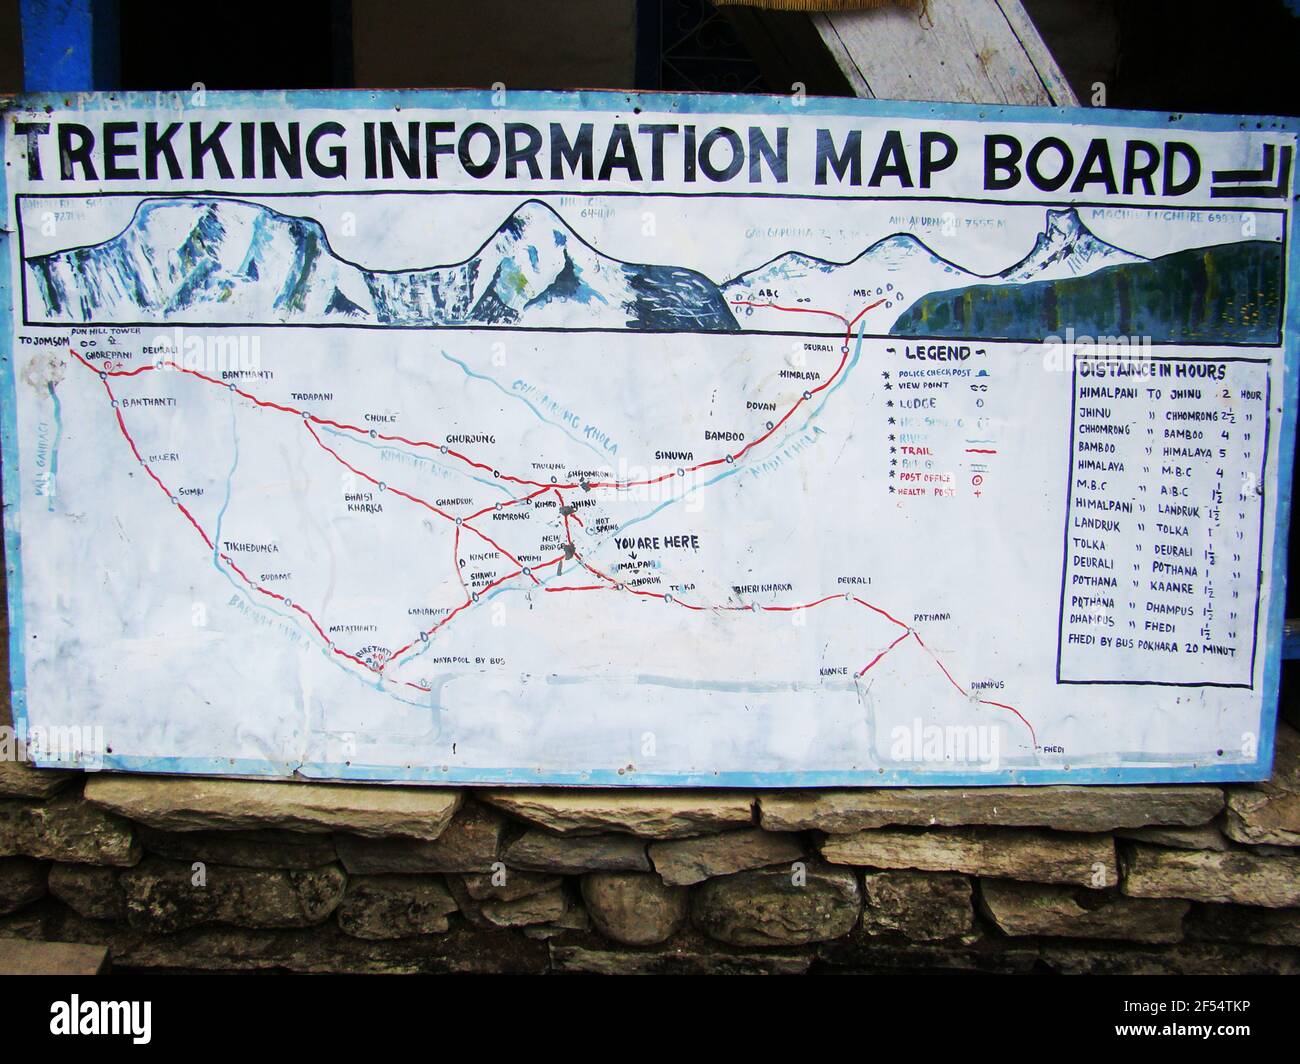 Trek information billboards along the Annapurna Base Camp route, Nepal  Stock Photo - Alamy